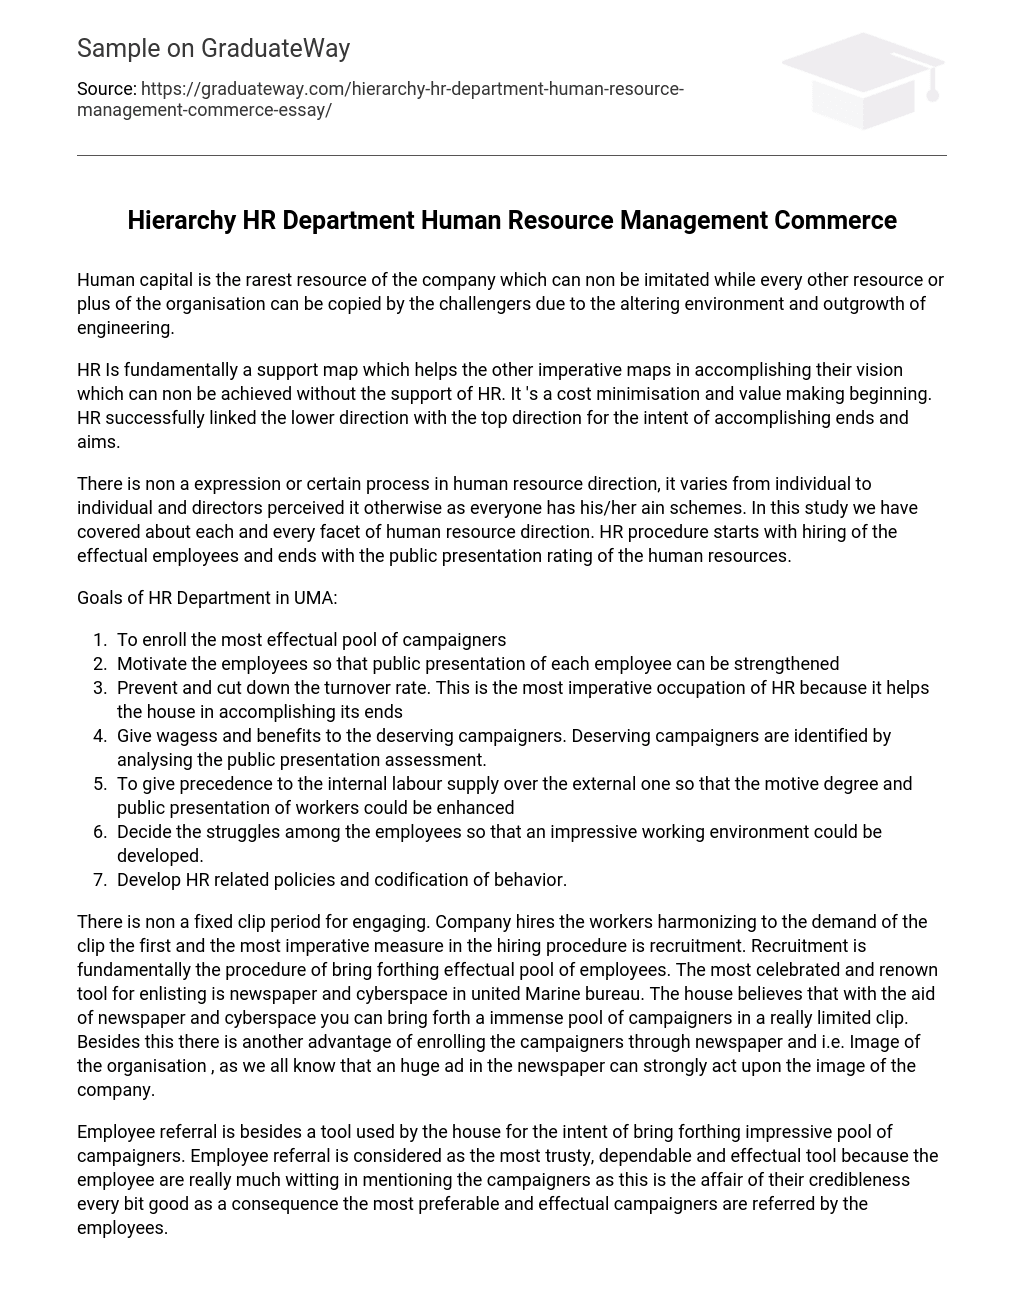 Hierarchy HR Department Human Resource Management Commerce